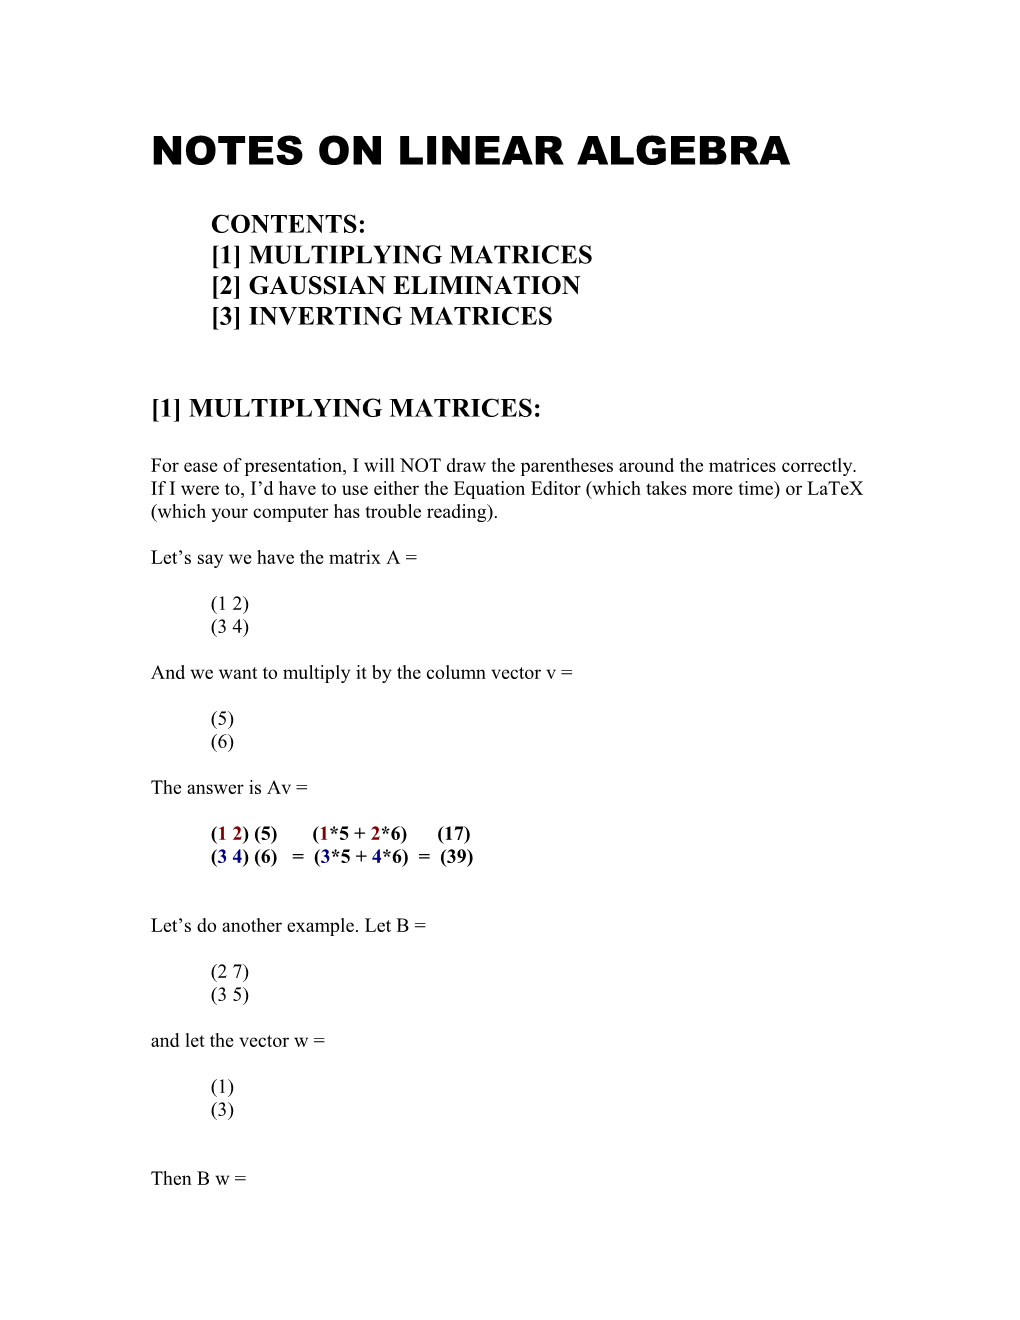 Notes on Linear Algebra